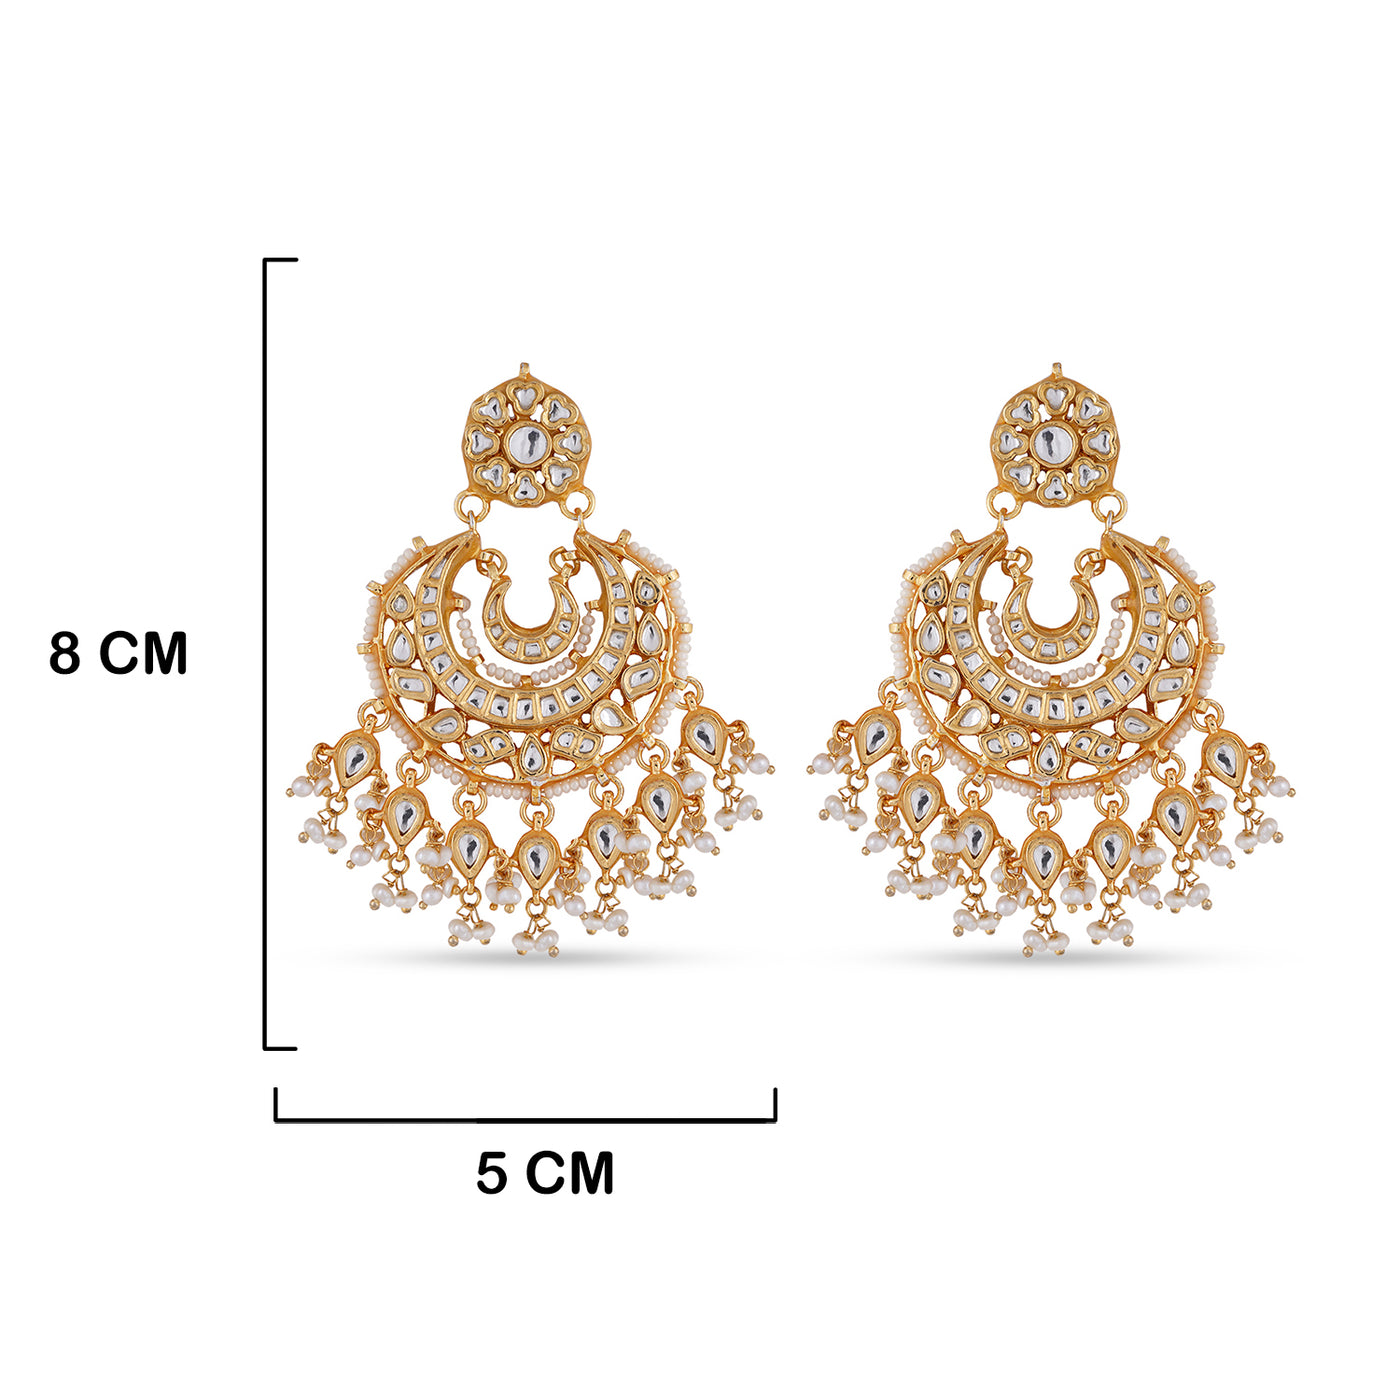 Classic Kundan Chanbaali Earrings with measurements in cm.